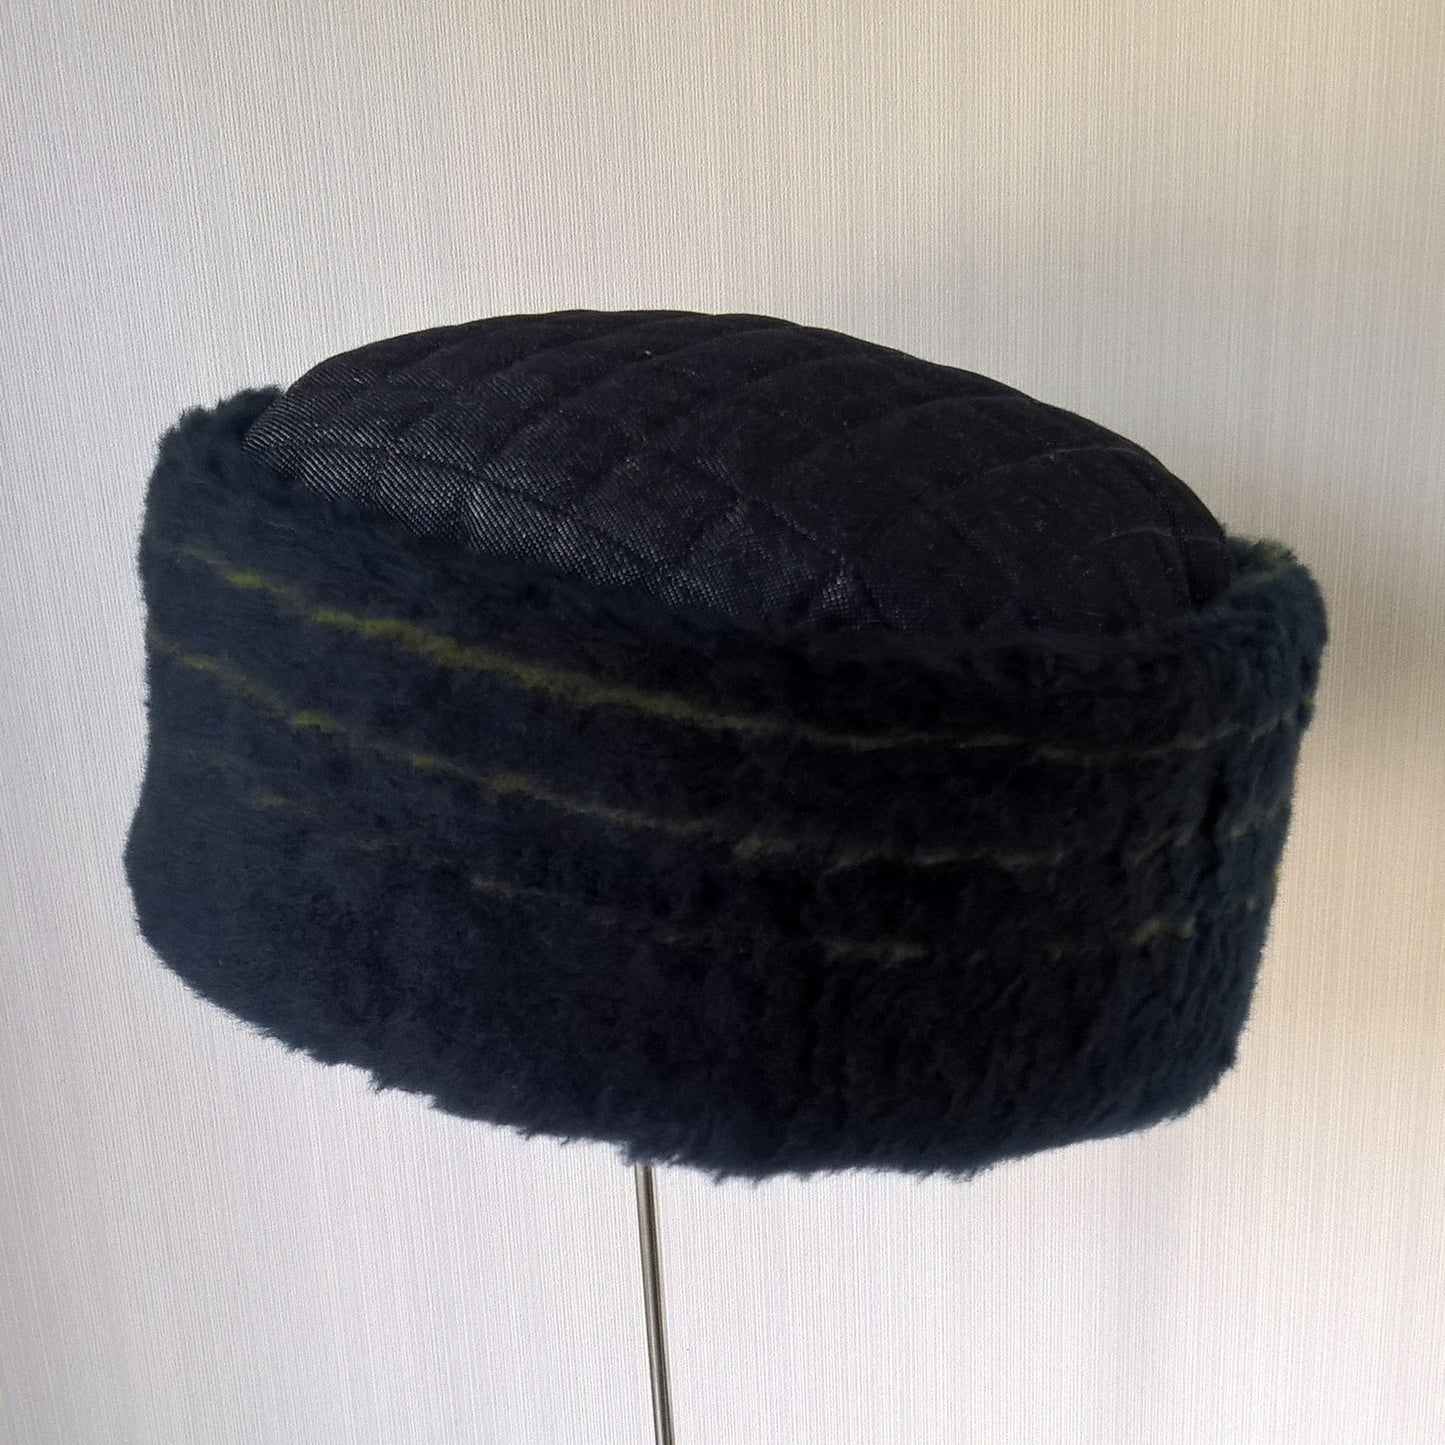 Pillbox shaped cap handmade in blue denim and wool fur